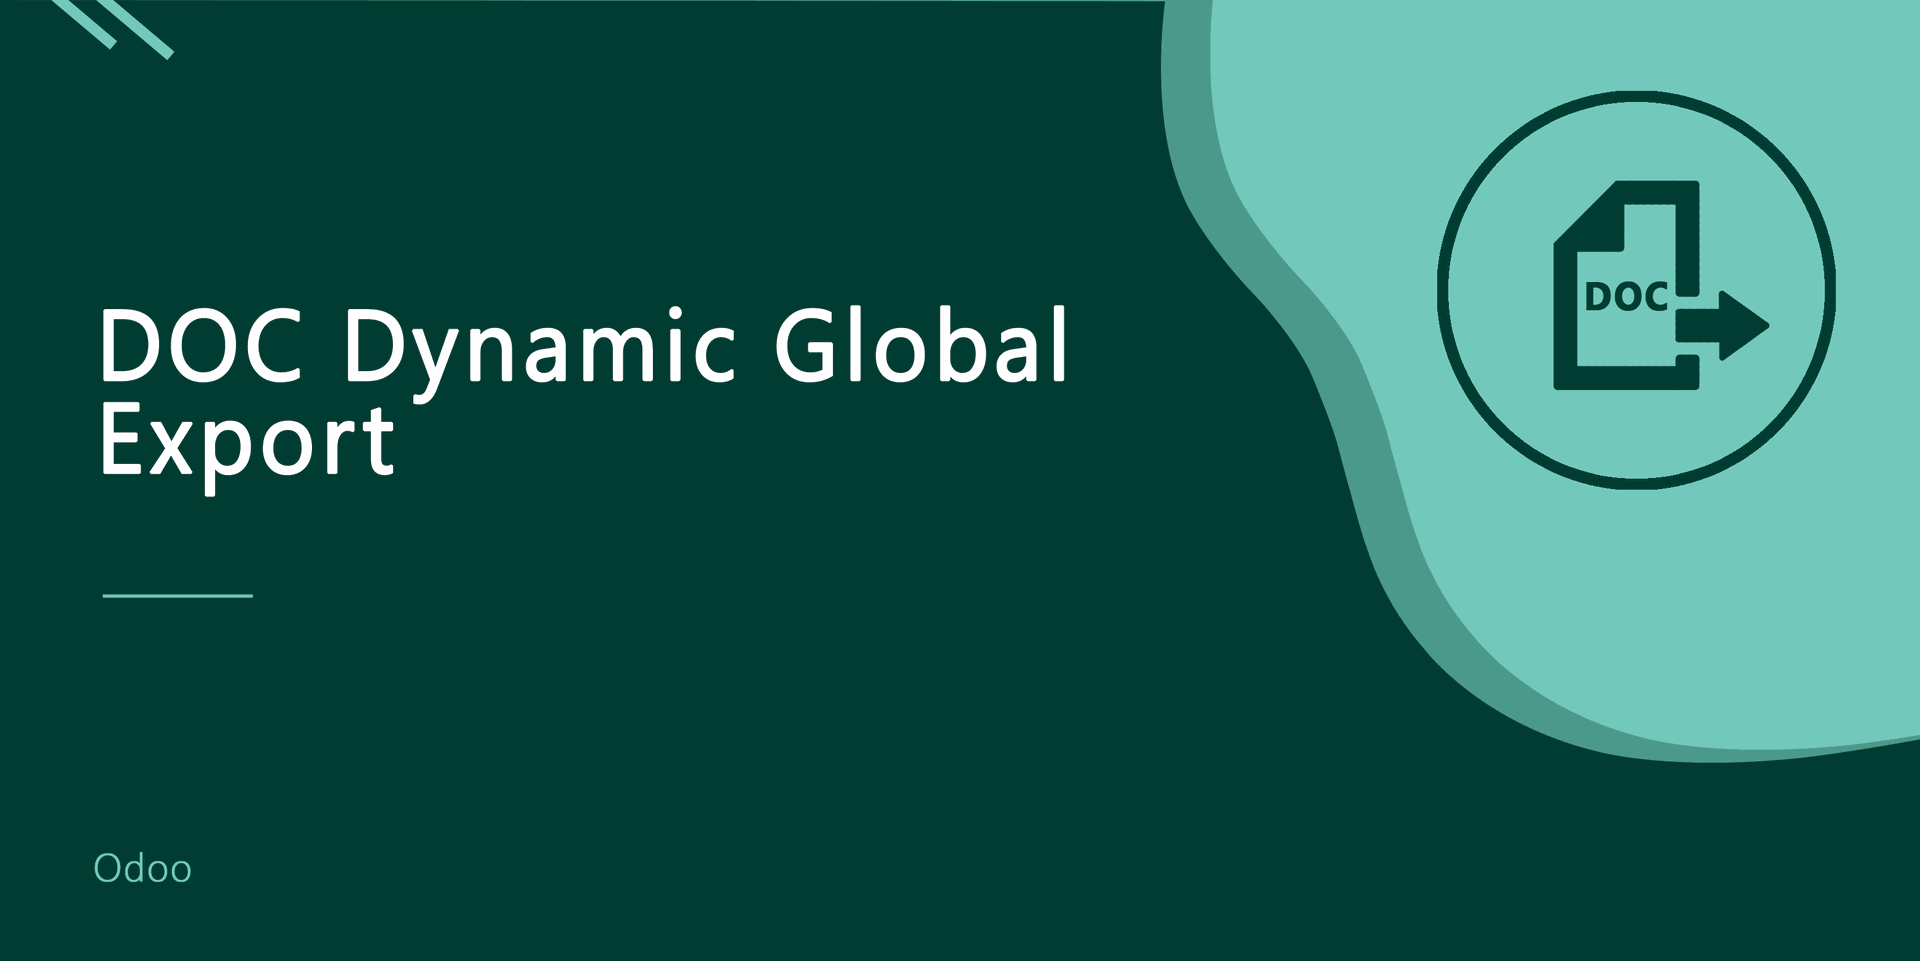 DOC Dynamic Global Export